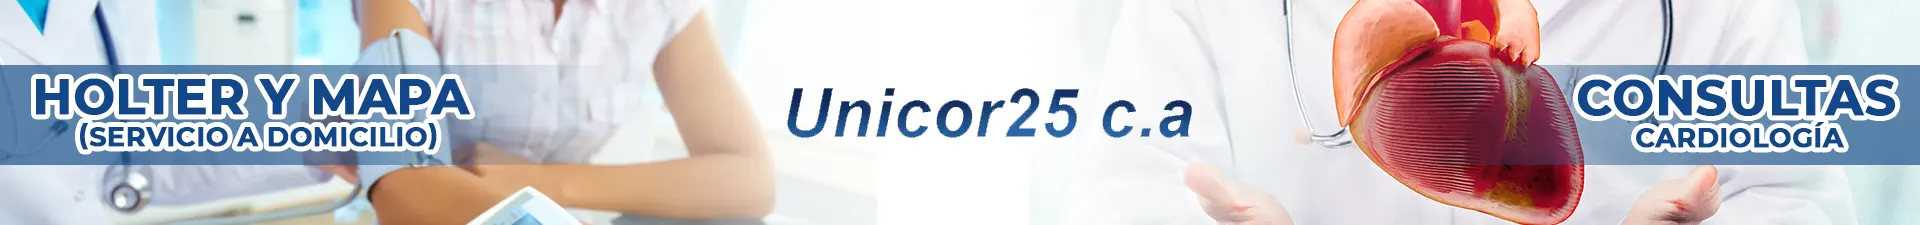 Imagen 1 del perfil de Unicor 25